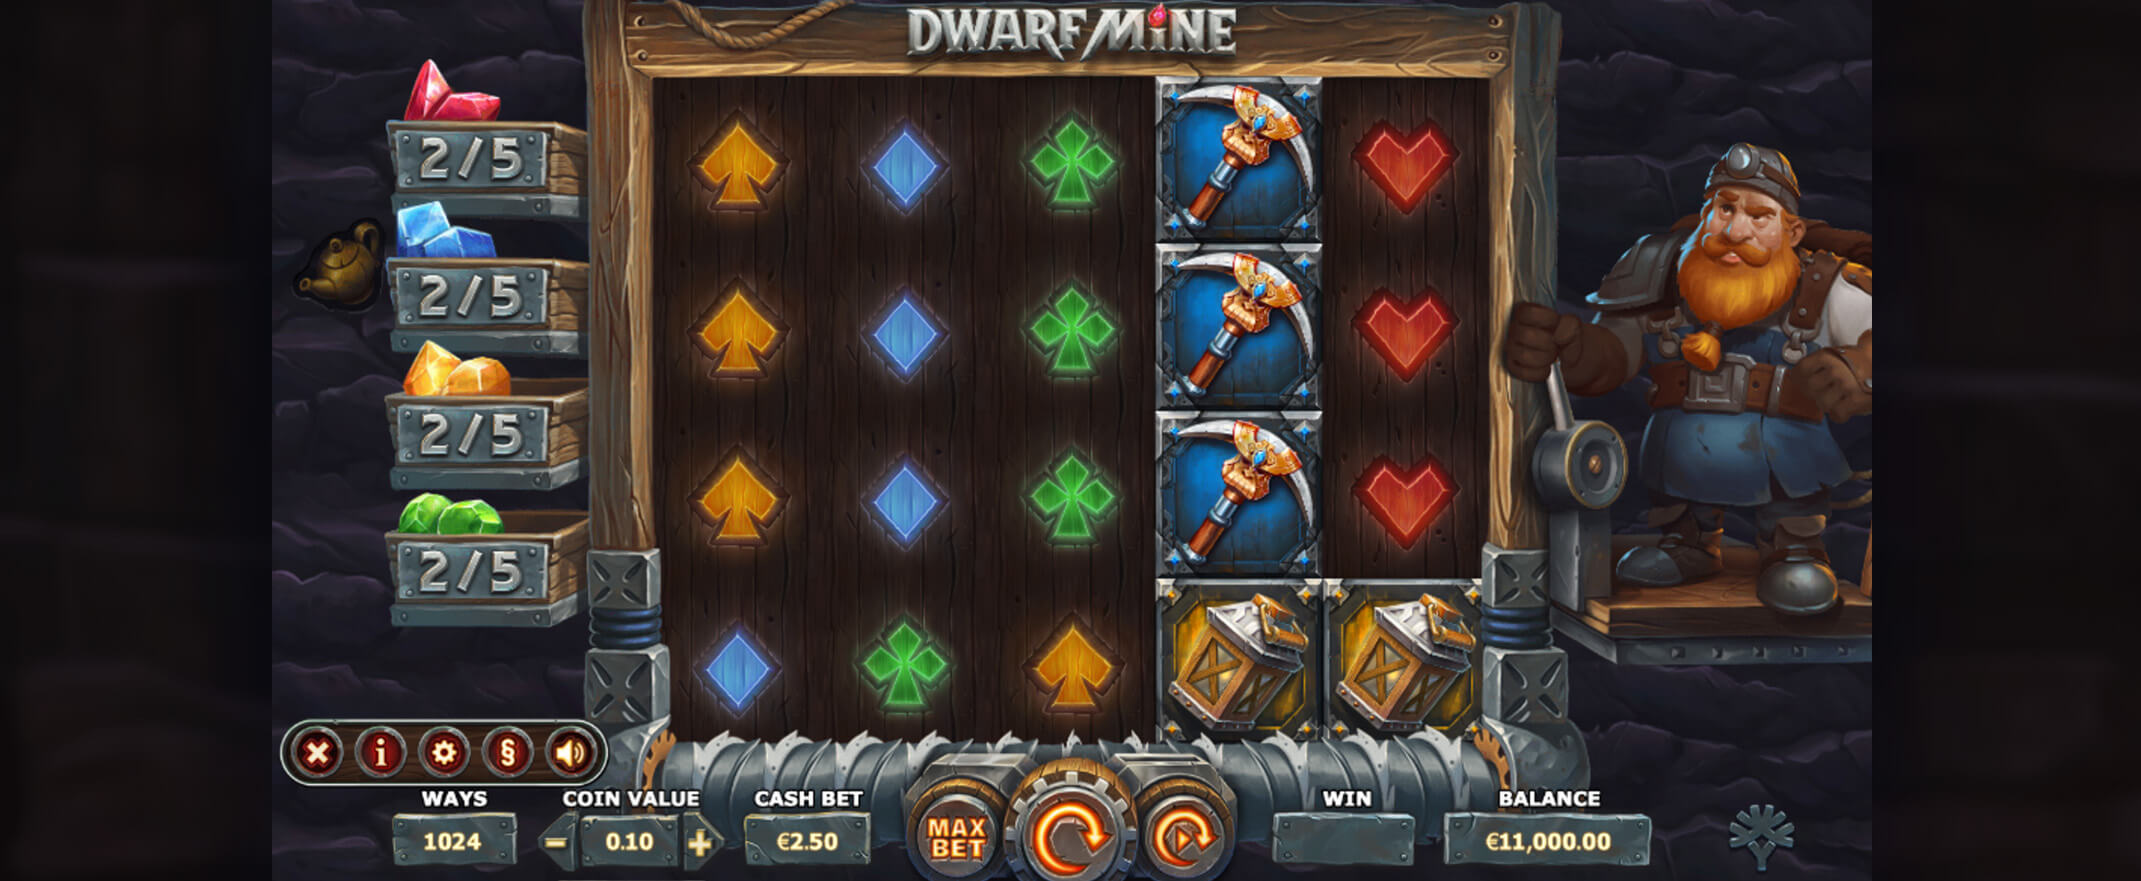 Dwarf Mine slot from Yggdrasil